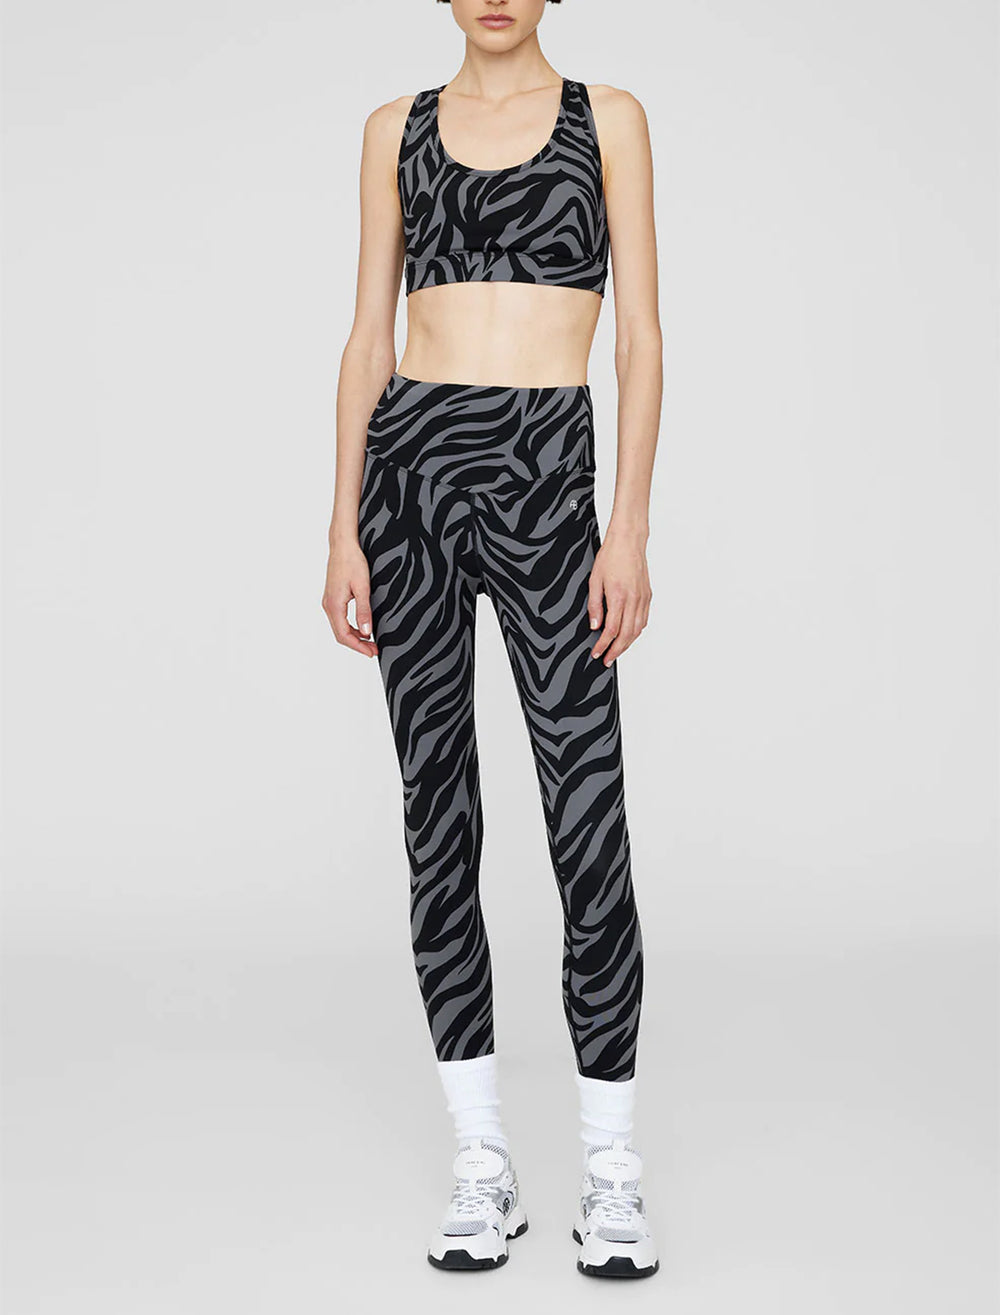 model wearing blake legging in zebra print with a matching sports bra